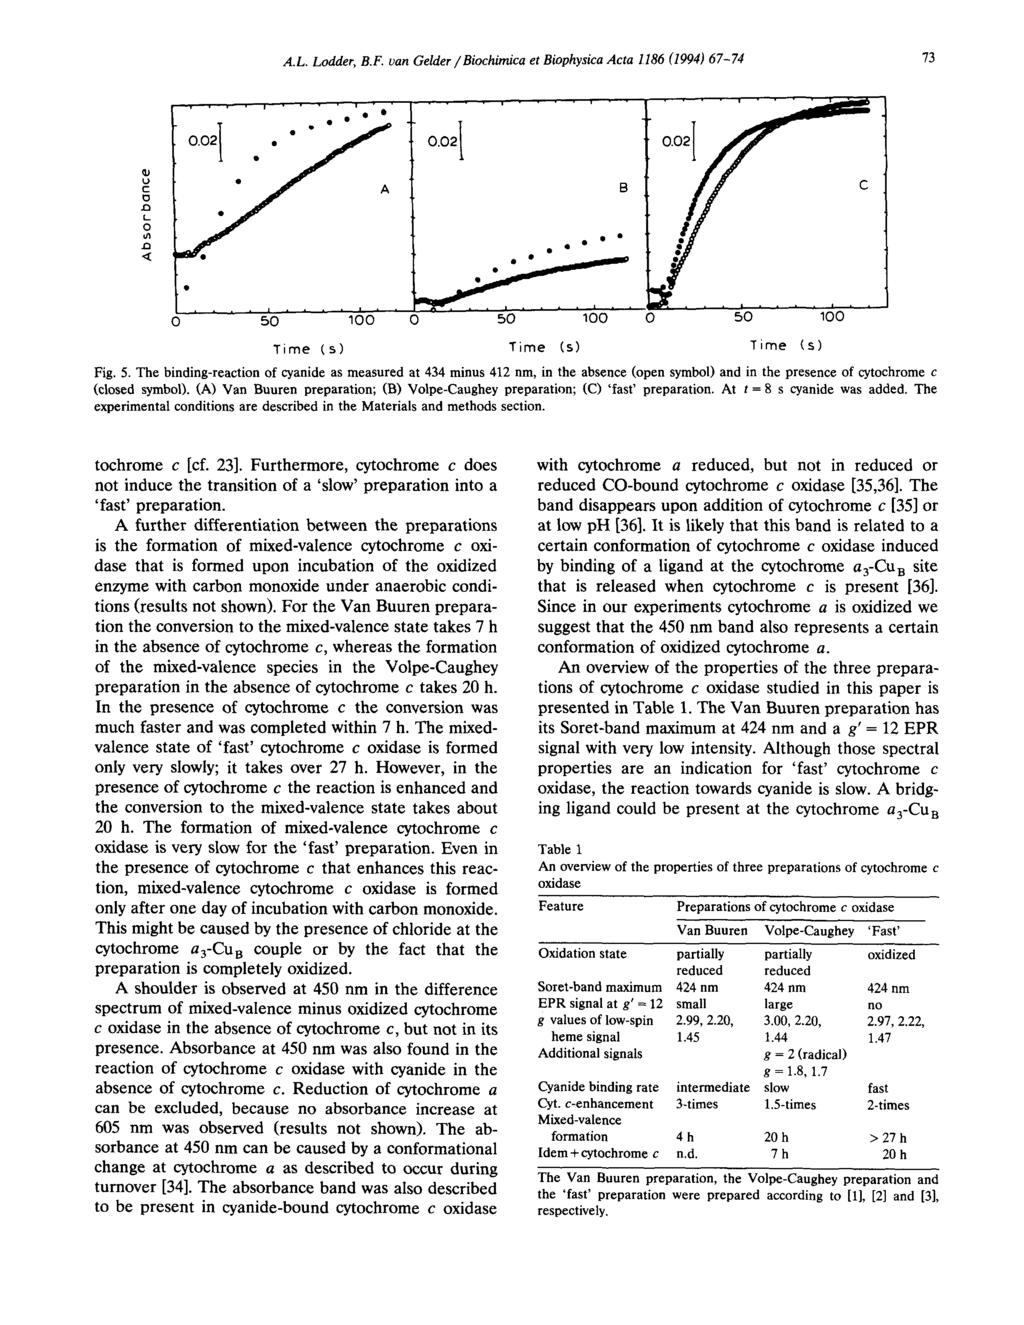 A.L. Lodder, B.F. uan Gelder / Biochimica et Biophysica Acta 1186 (1994) 67-74 73 o I t --z_ f,, i,. p.o,olq. O..... i.... 1 - g C..-... 0 50